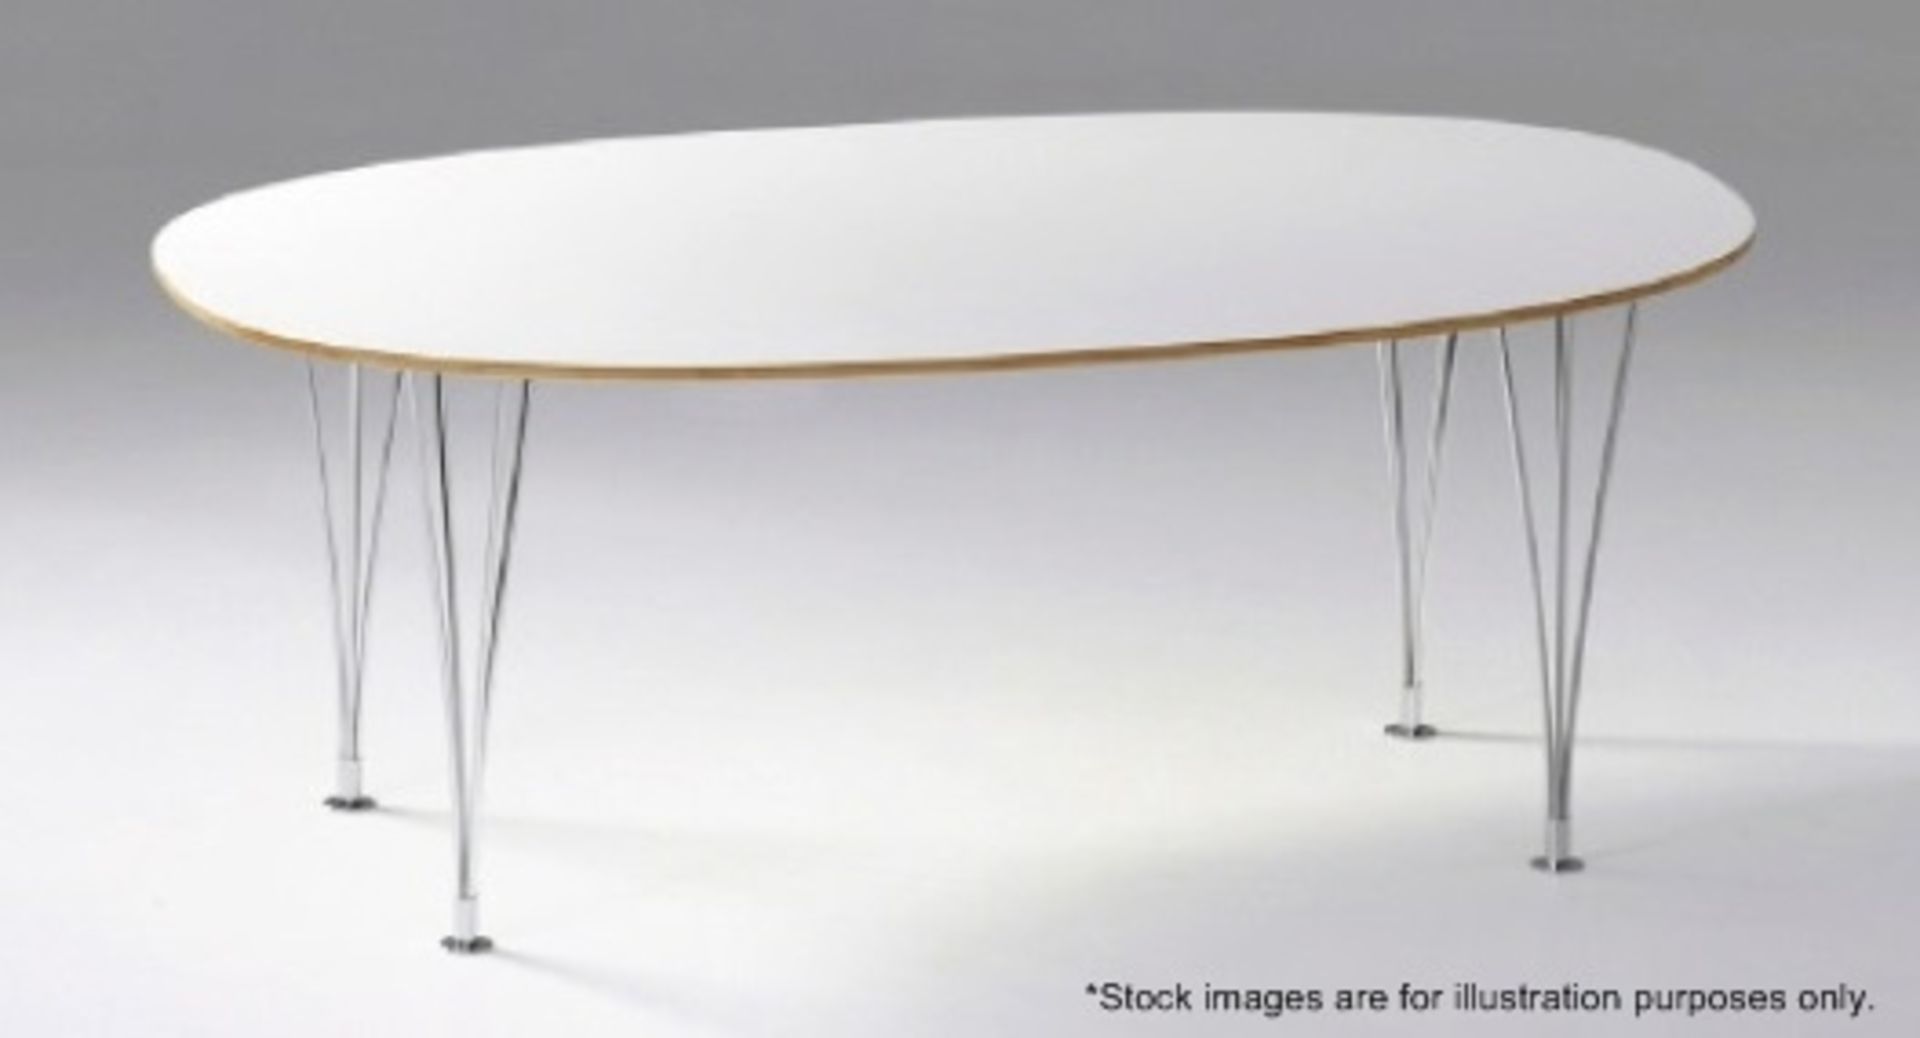 Freeform Piet / Hansen Inspired Super Ellipse 220cm Dining Table - New Stock - Image 2 of 2